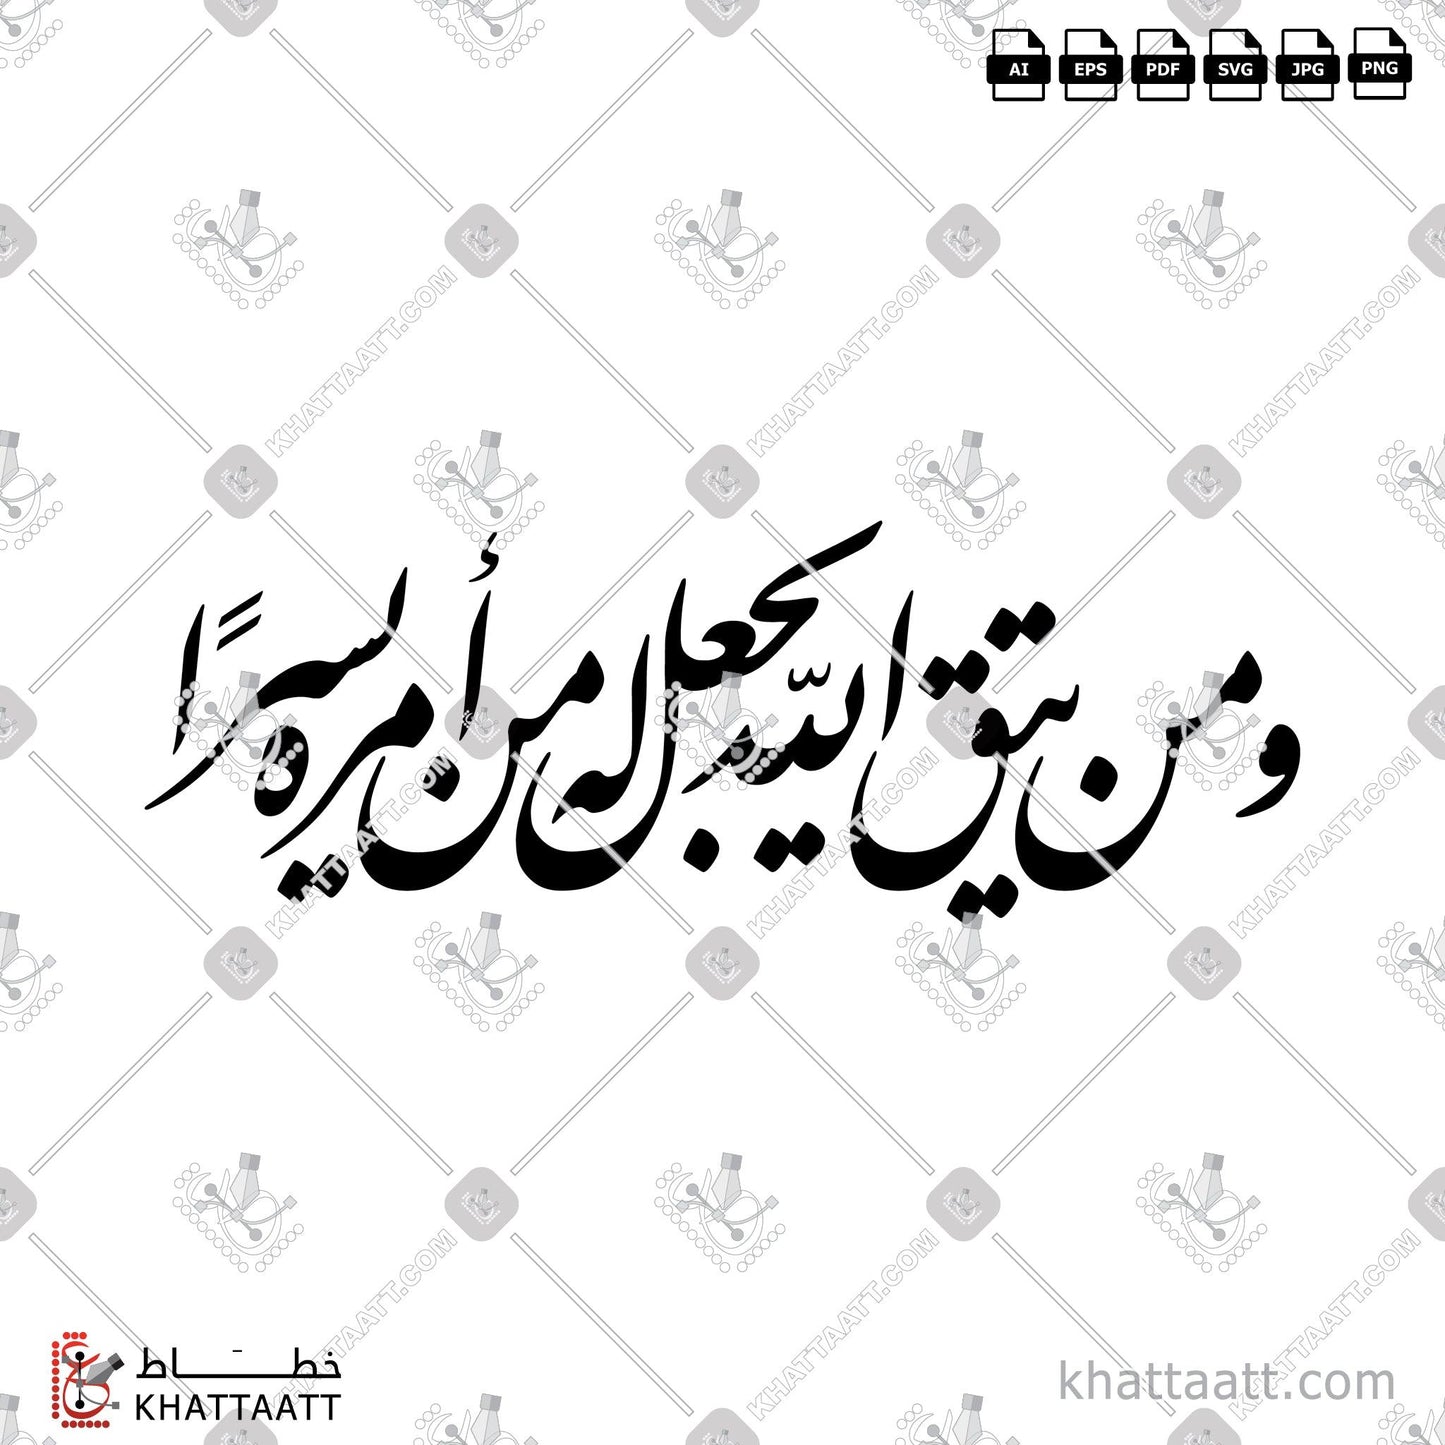 Download Arabic Calligraphy of ومن يتق الله يجعل له من أمره يسرا in Farsi - الخط الفارسي in vector and .png